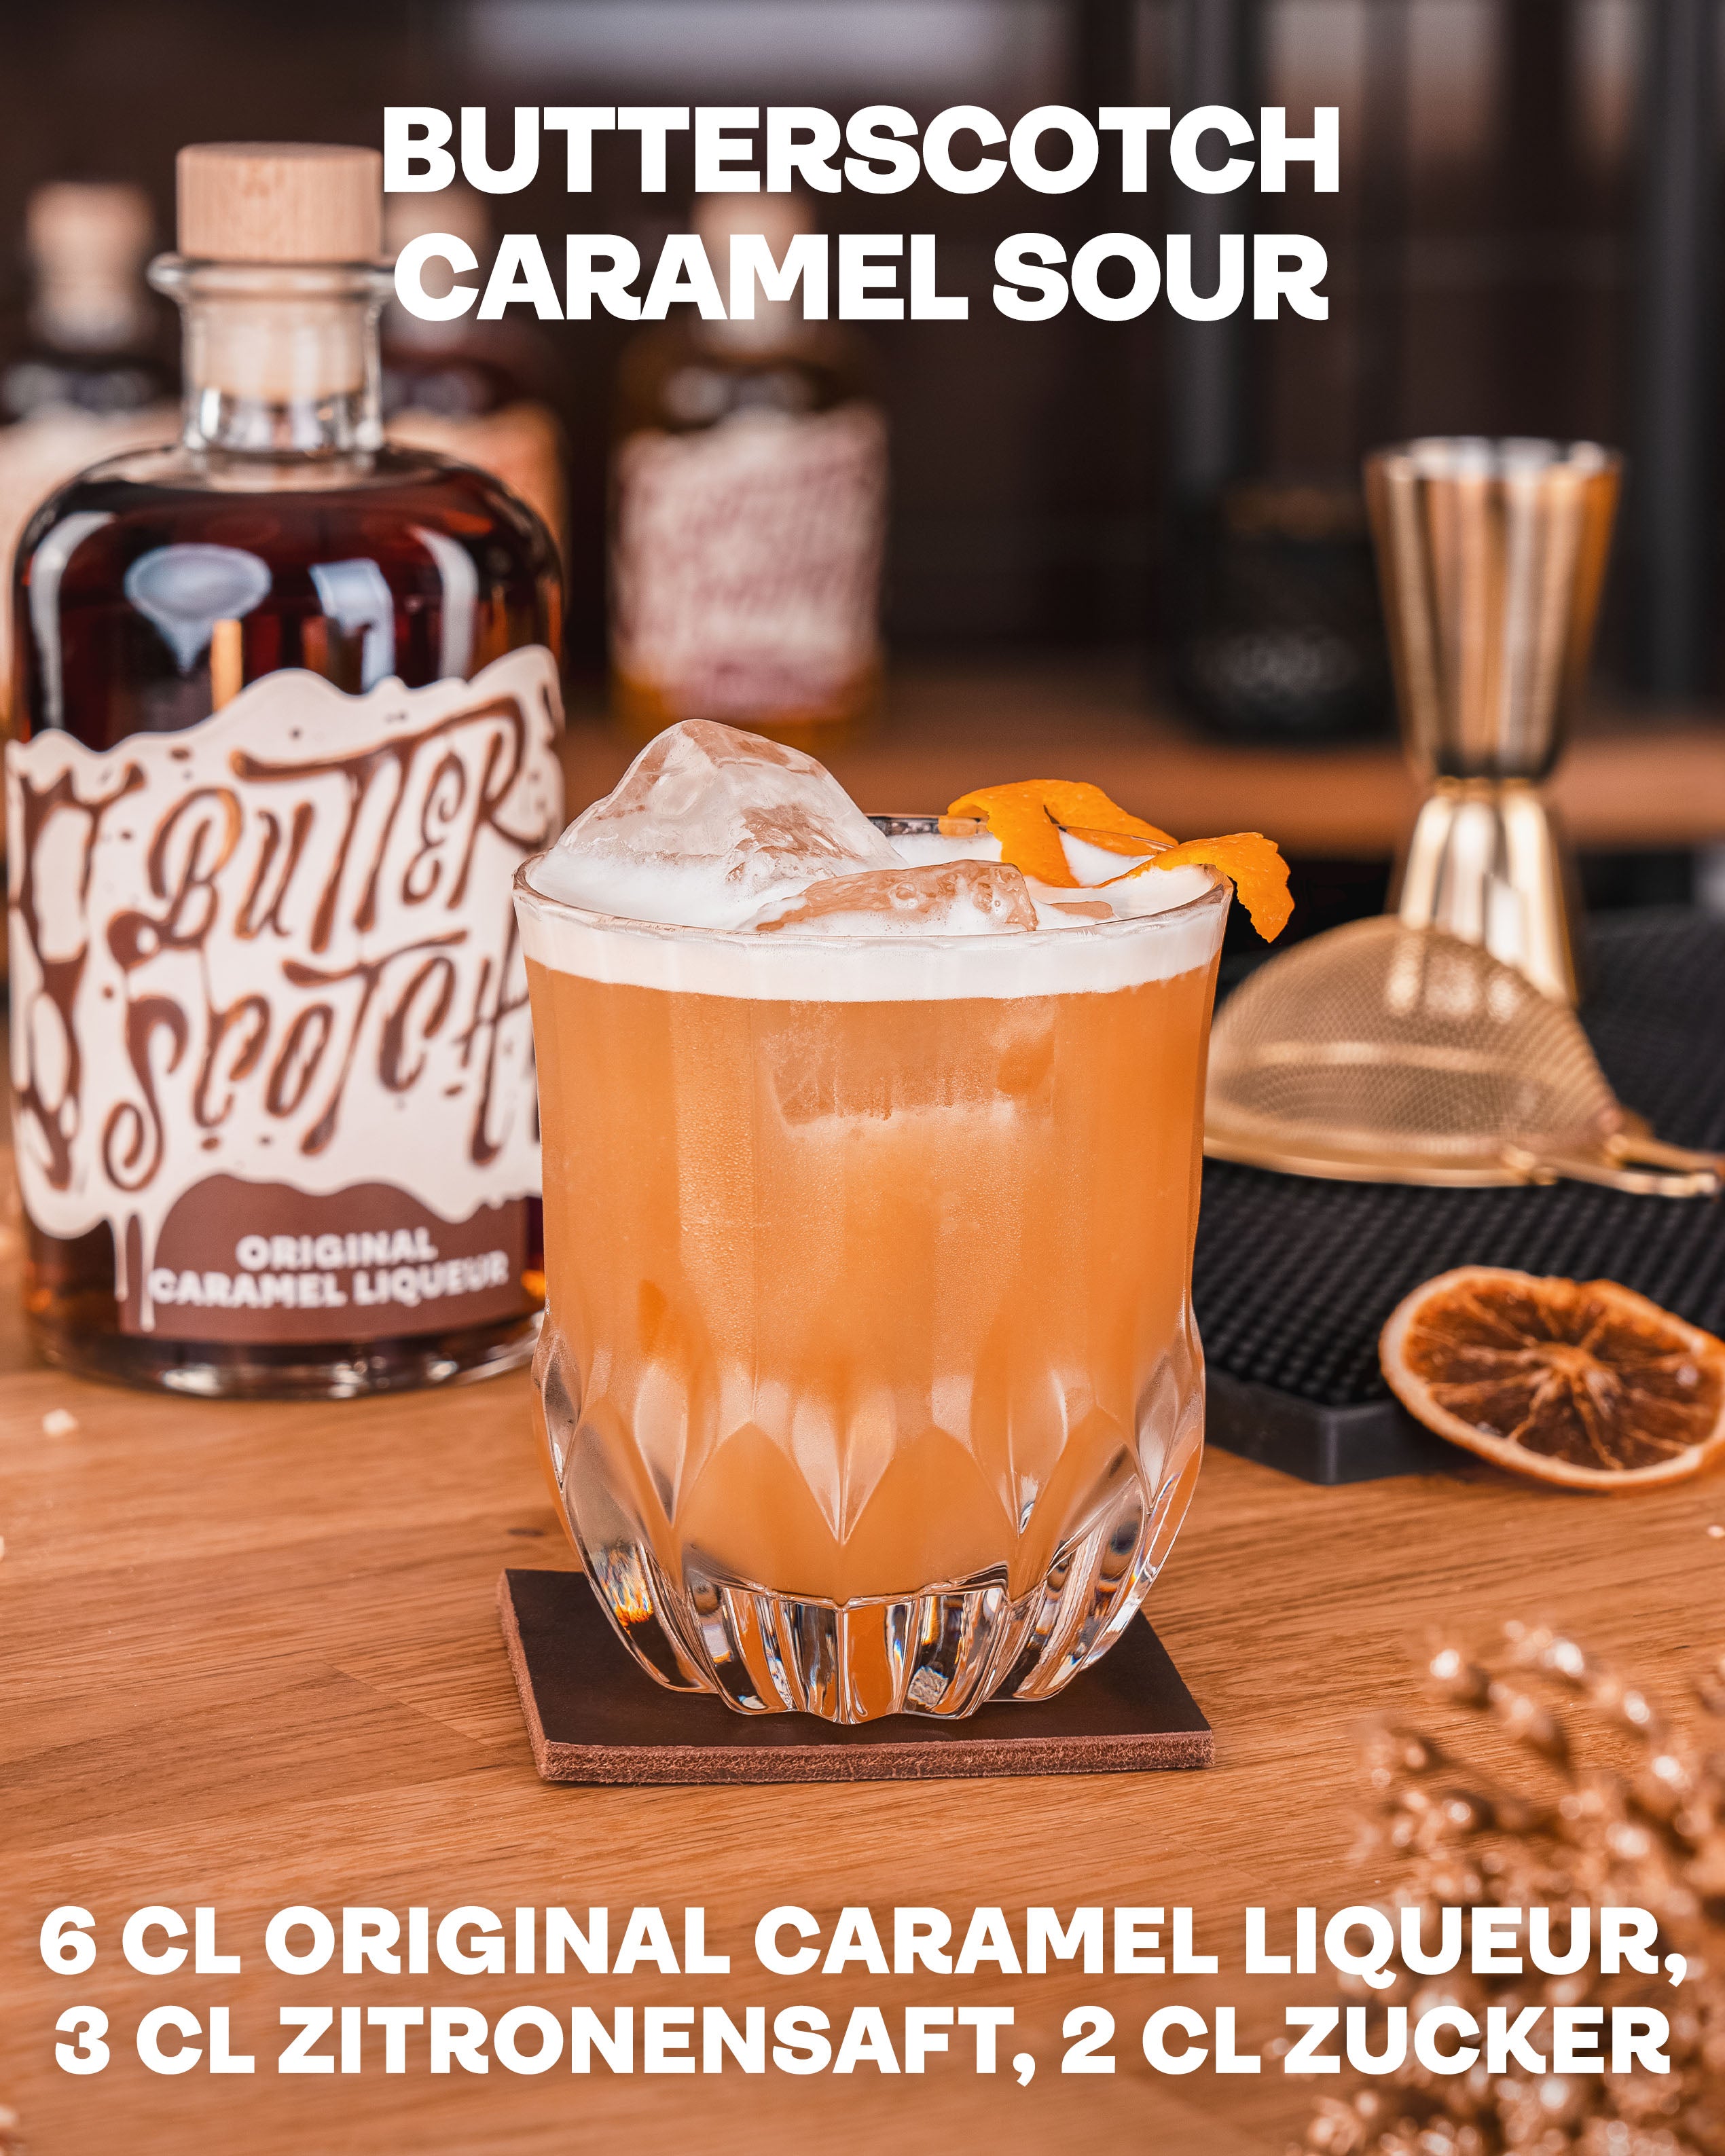 Original Caramel Liqueur